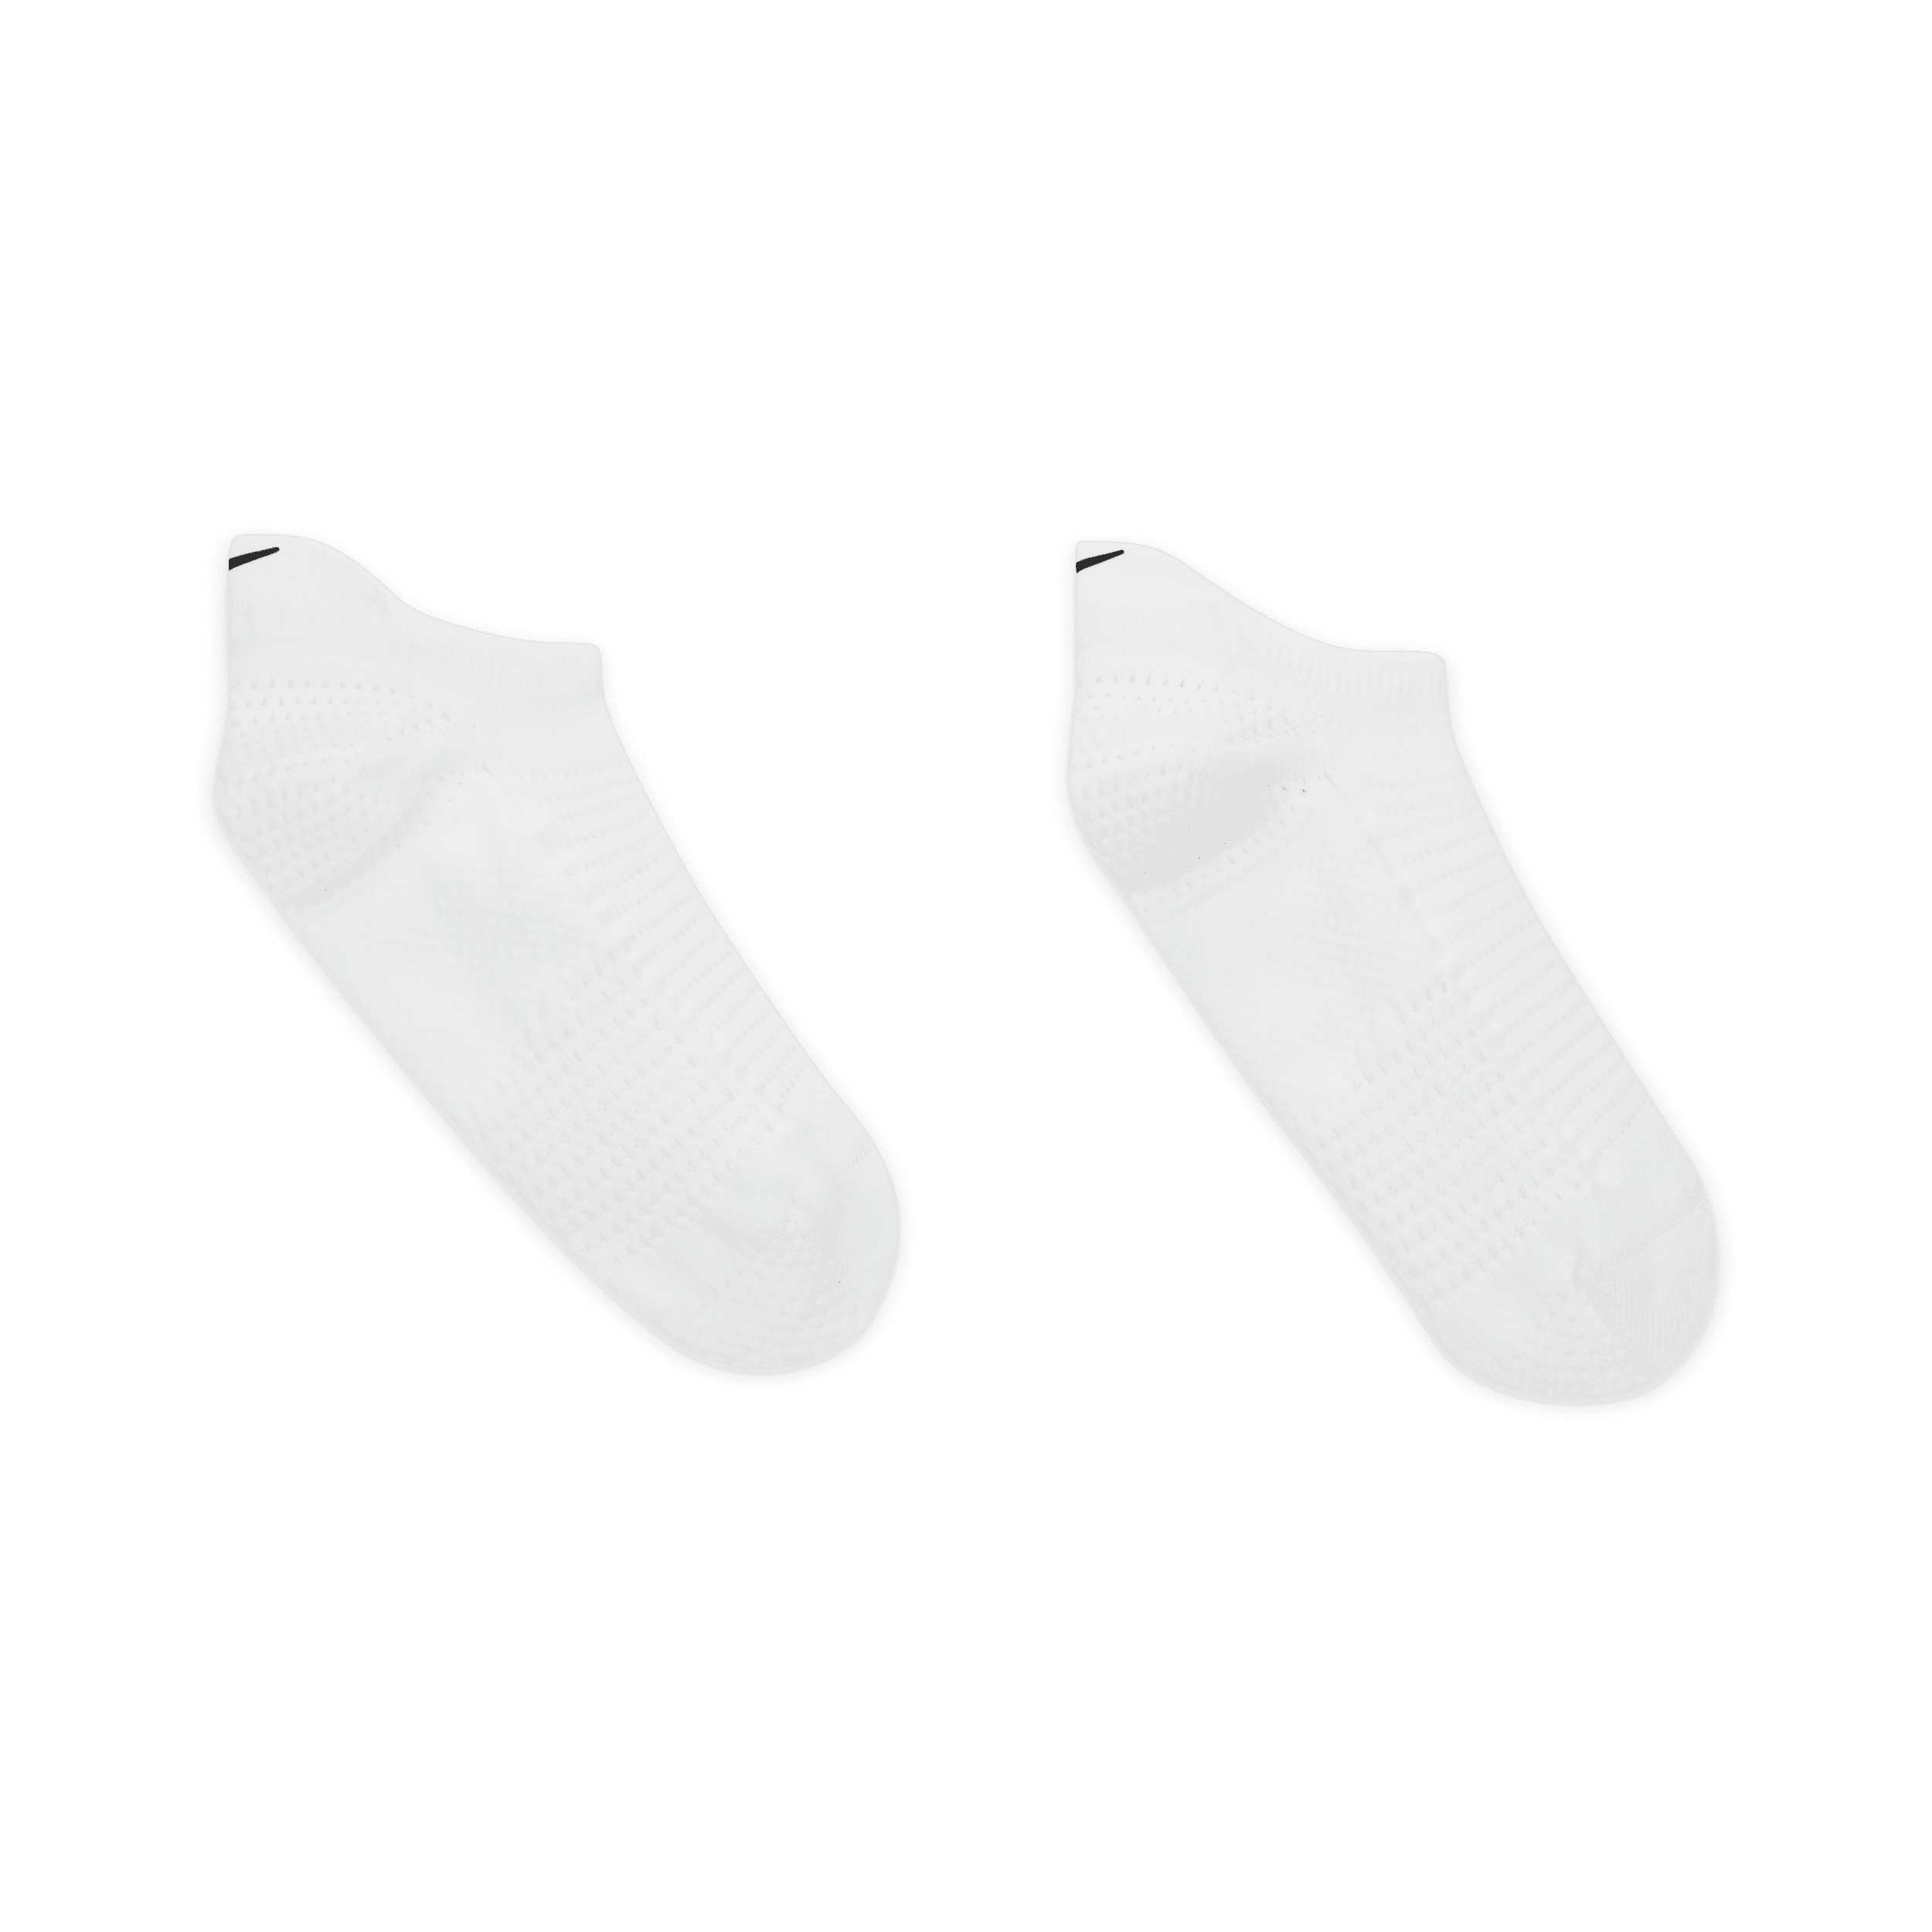 Nike Unicorn Dri-FIT ADV no-show sokken met demping (1 paar) Wit